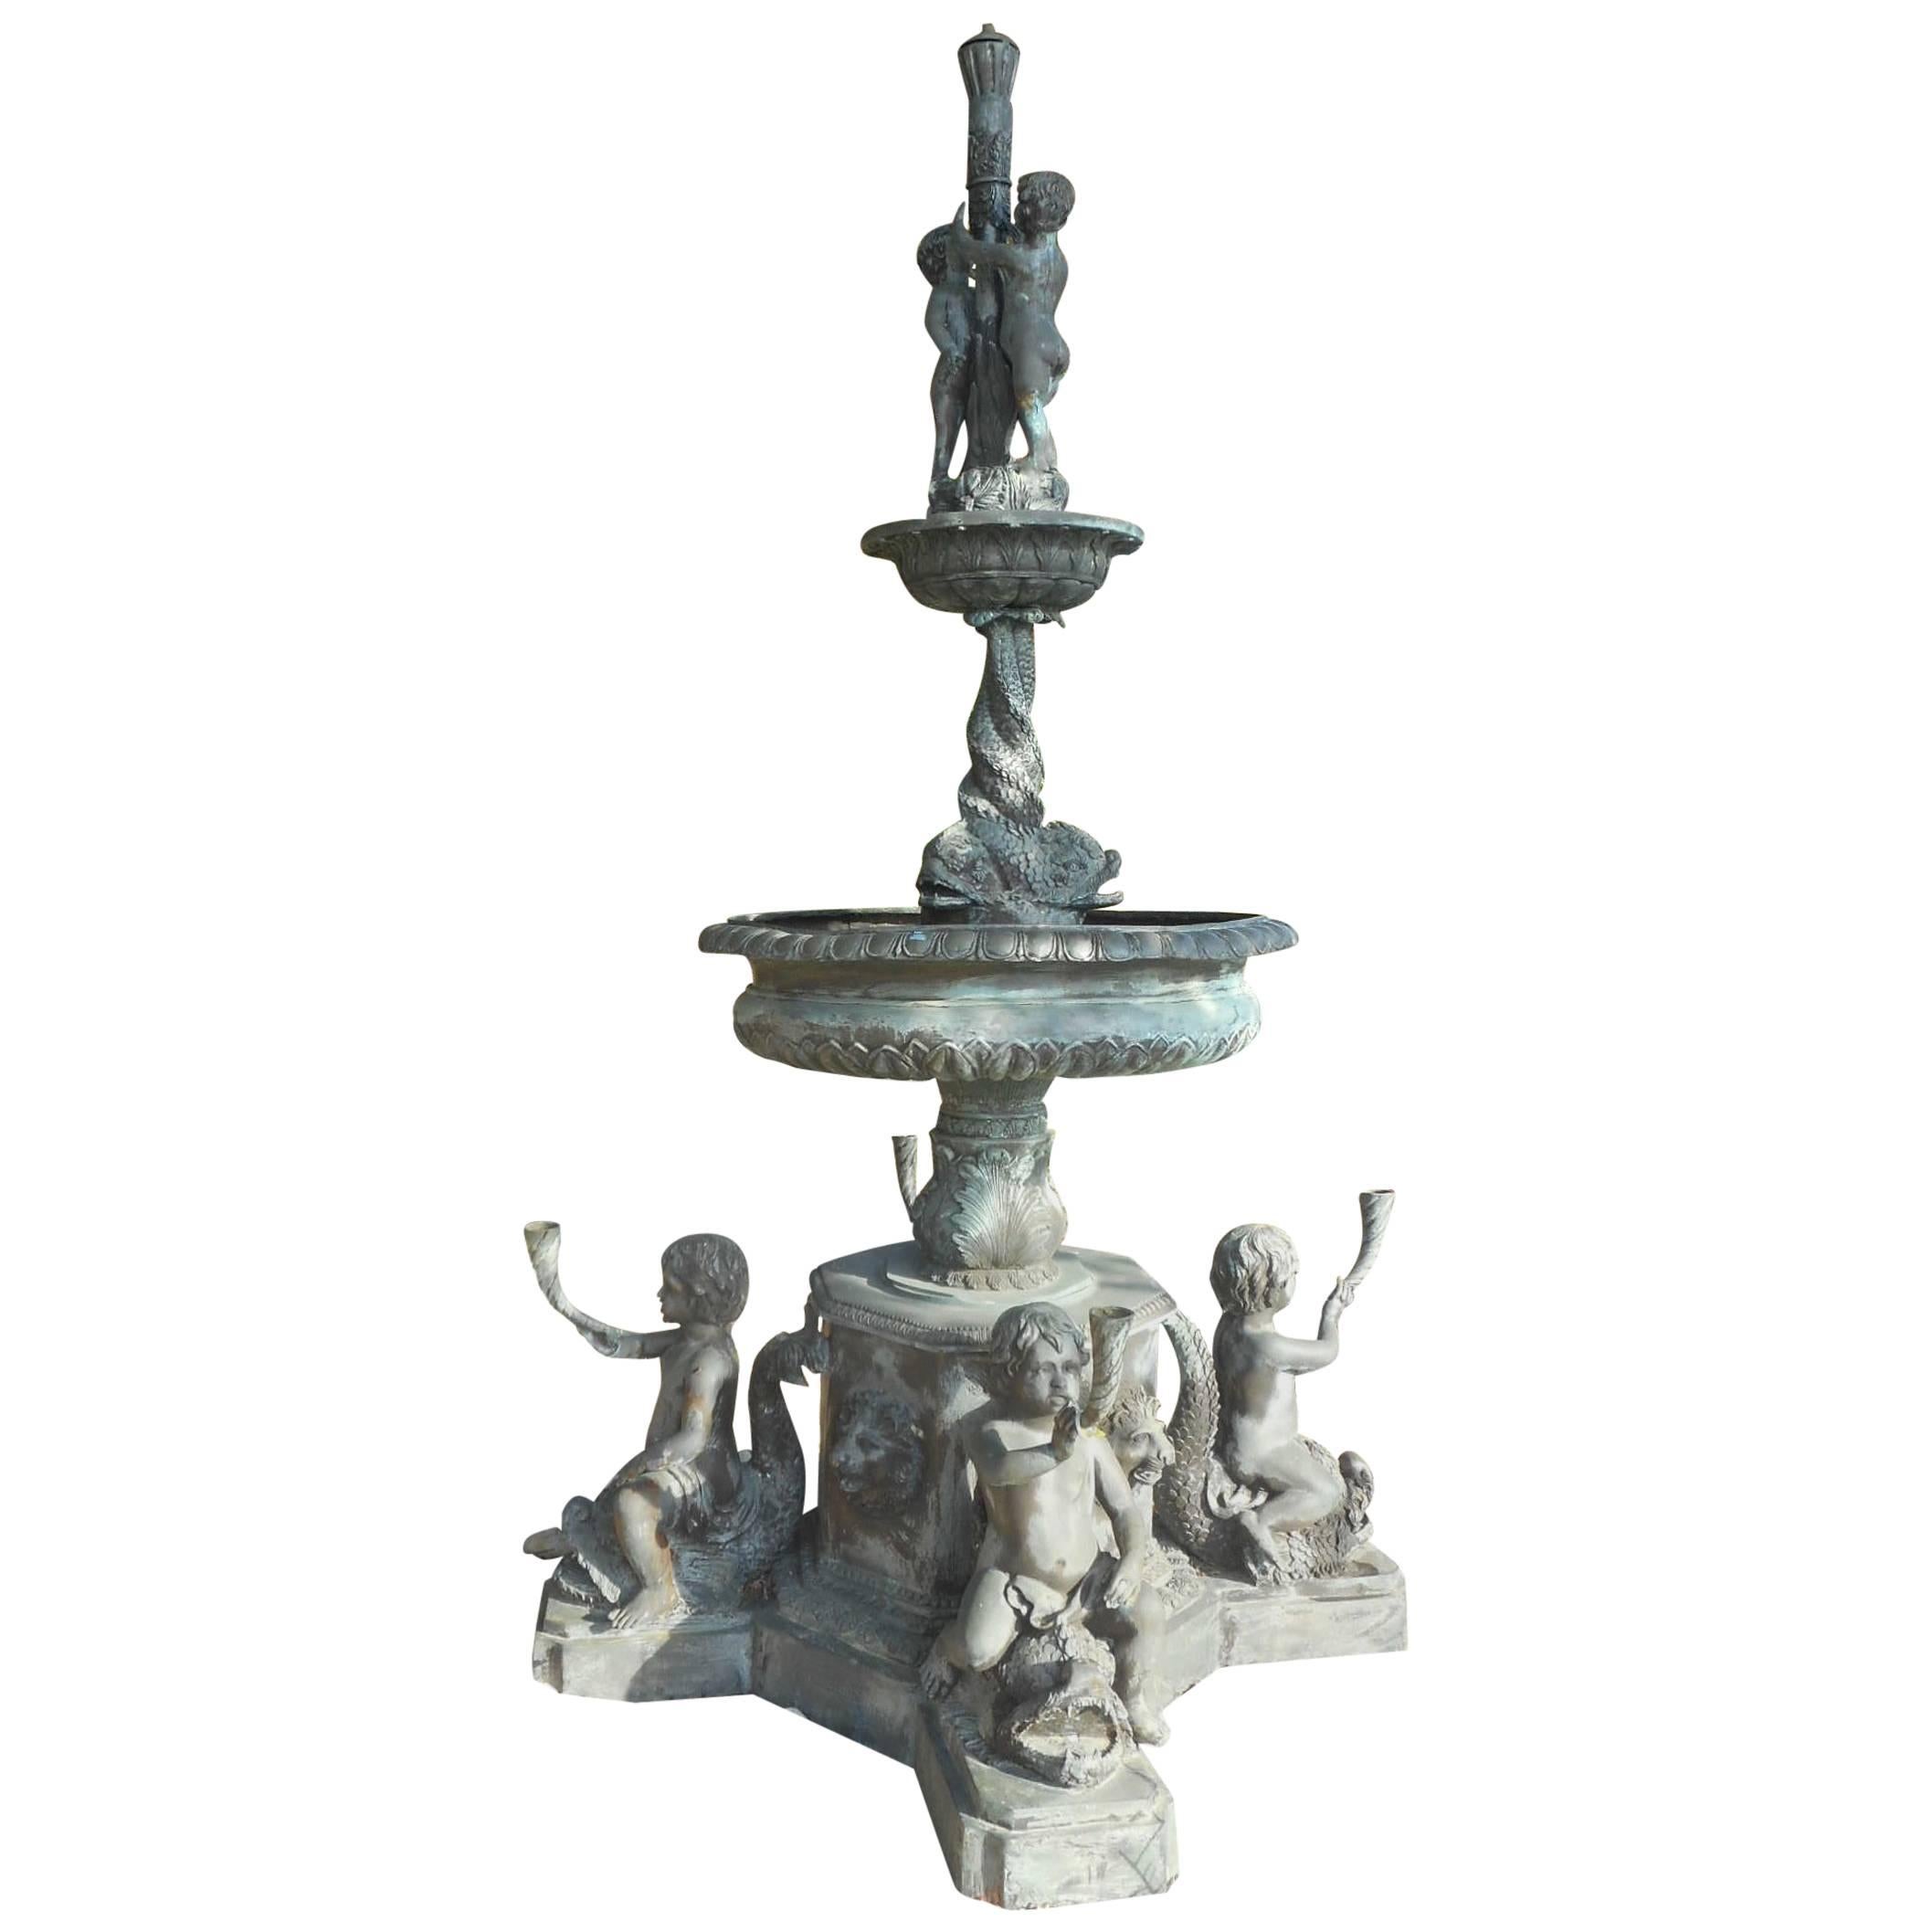 Impressive Bronze Fountain with Cherubs